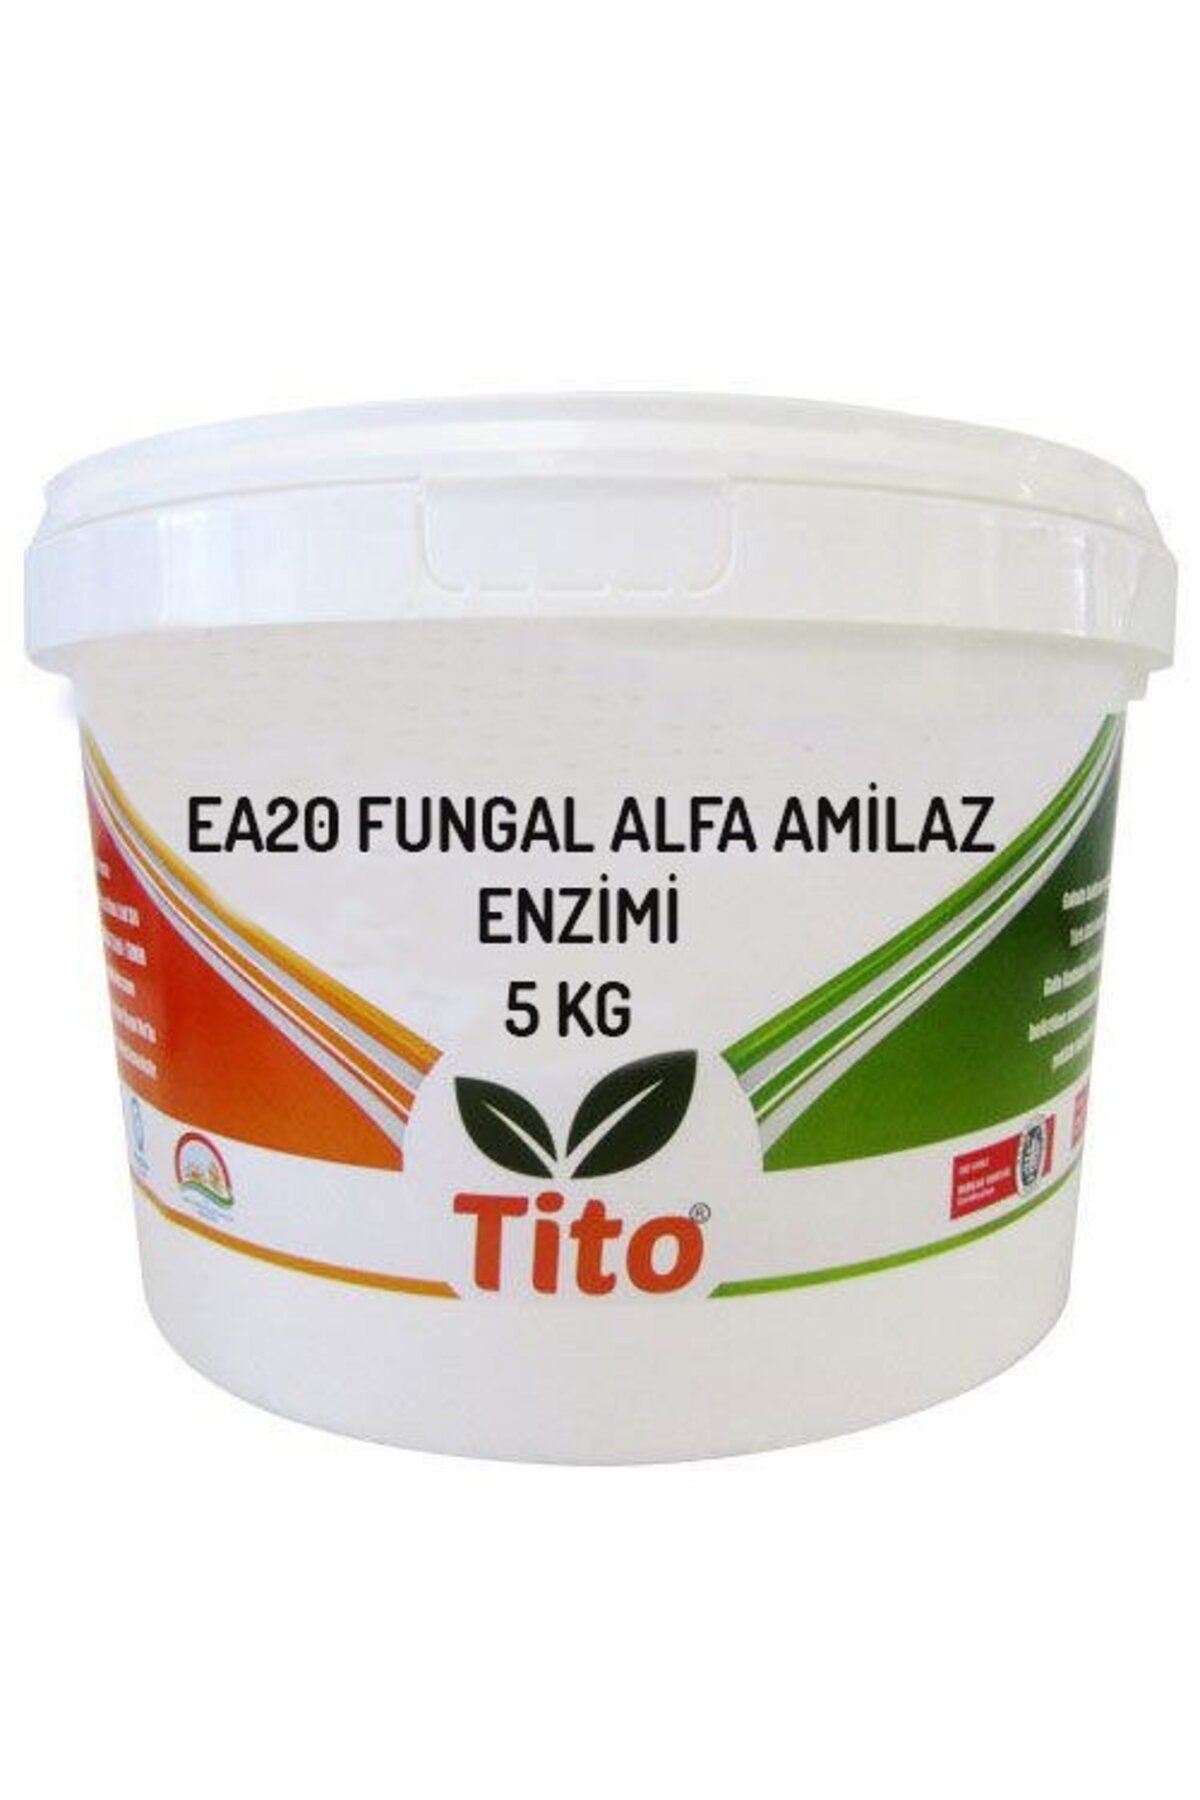 tito Fungal Alfa Amilaz Enzimi Ea20 5 Kg